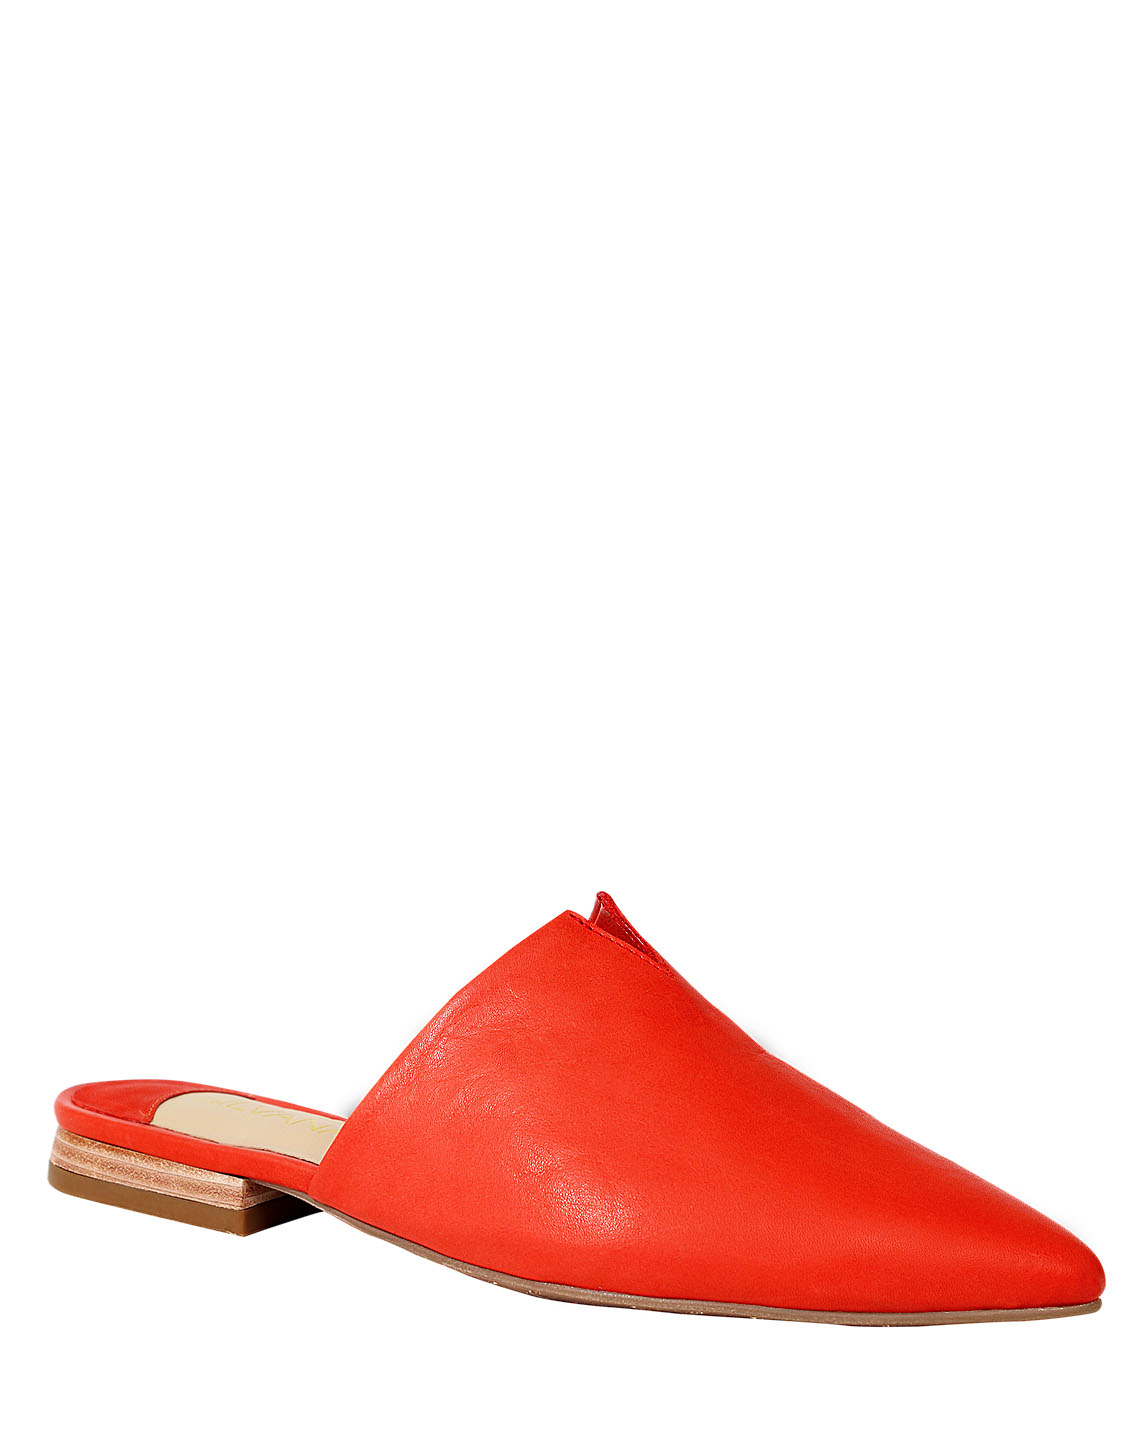 Zapato Zueco FZ-9500 Color Rojo